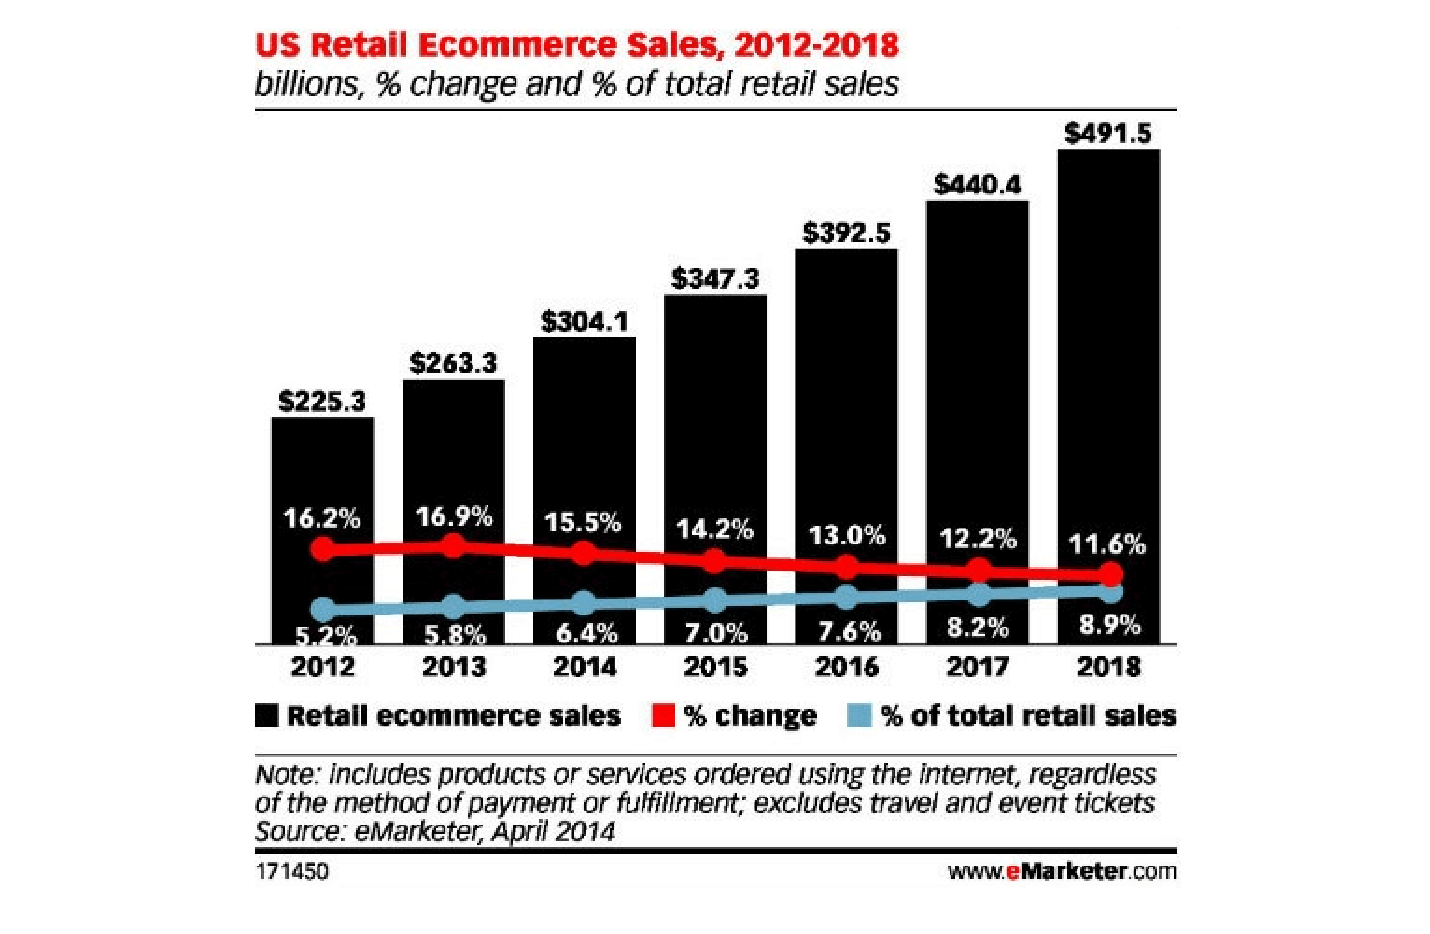 E-Commerce Sales